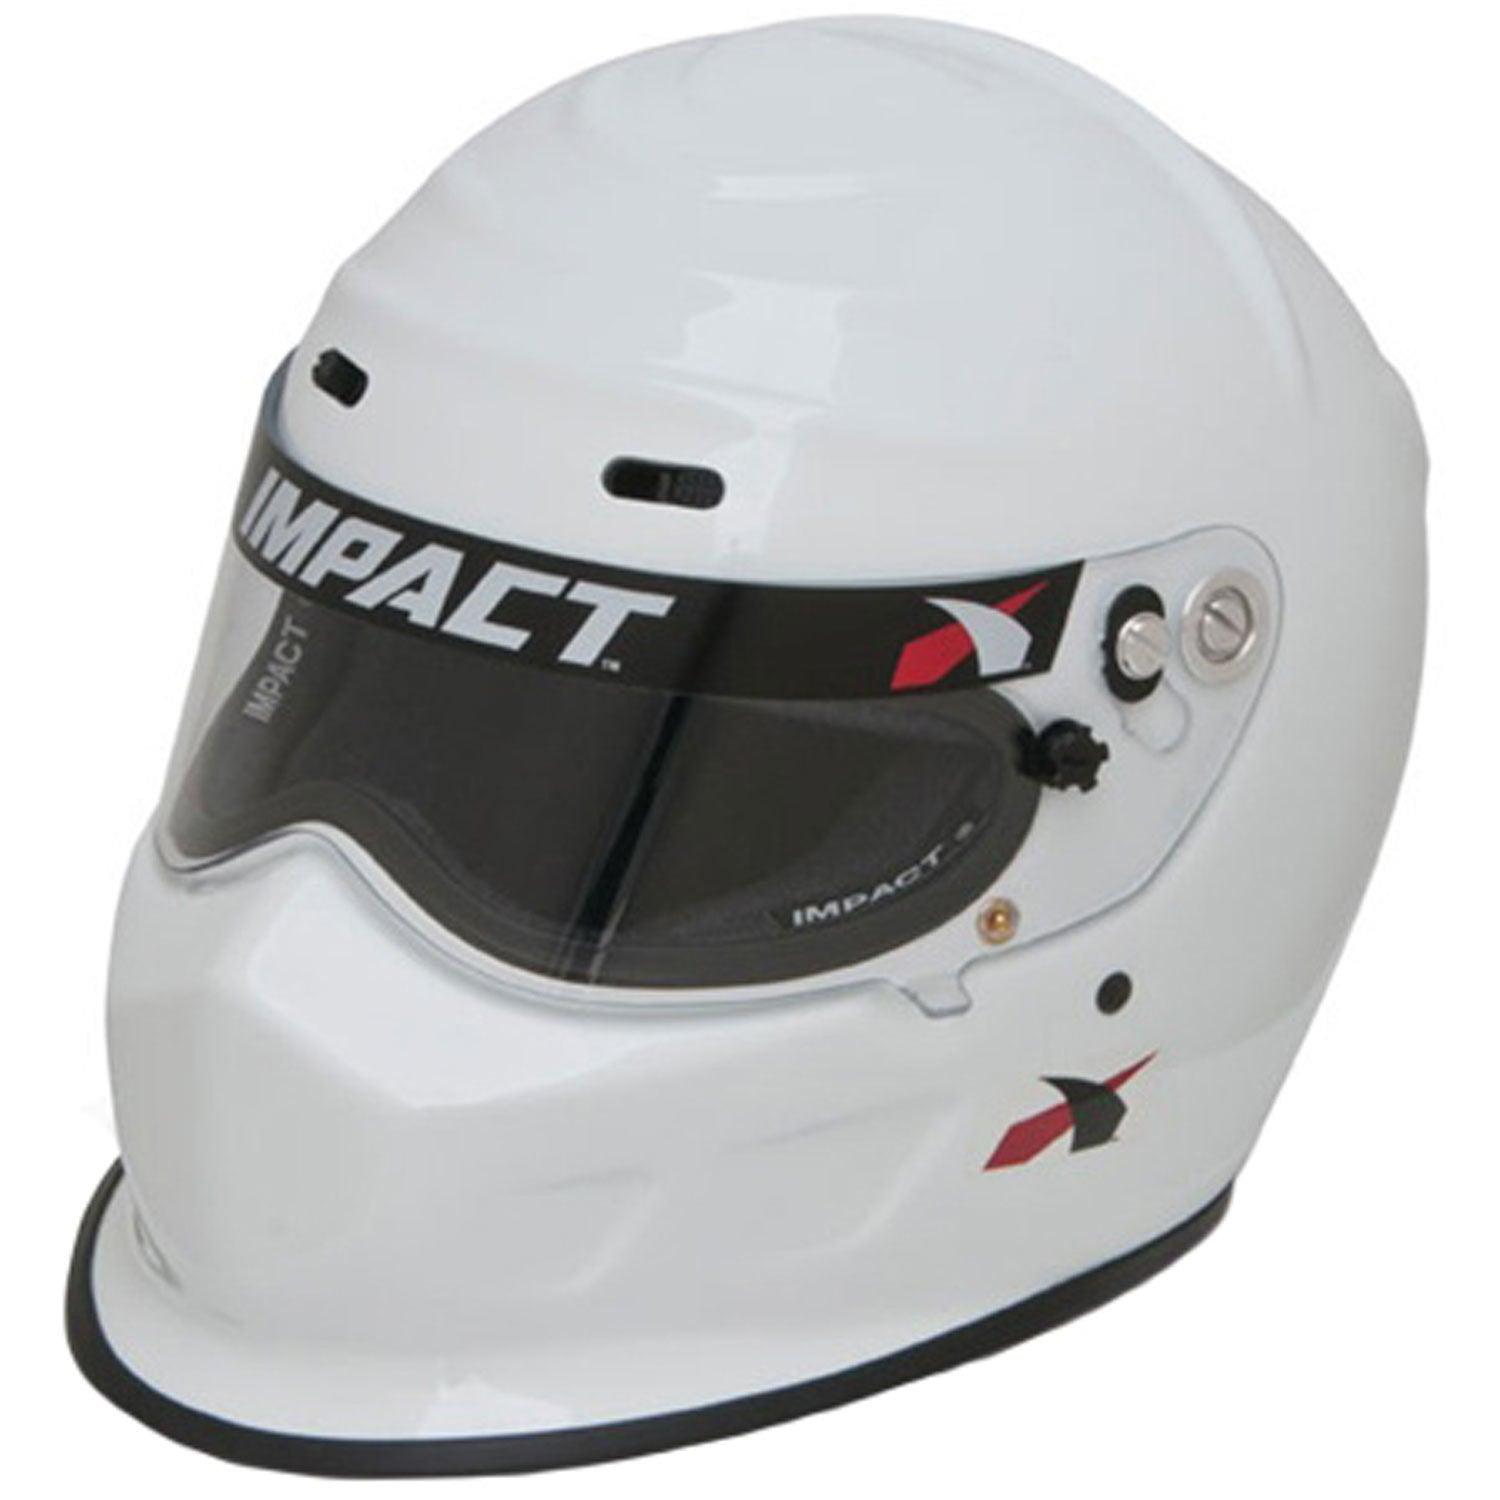 Helmet Champ X-Large White SA2020 - Burlile Performance Products